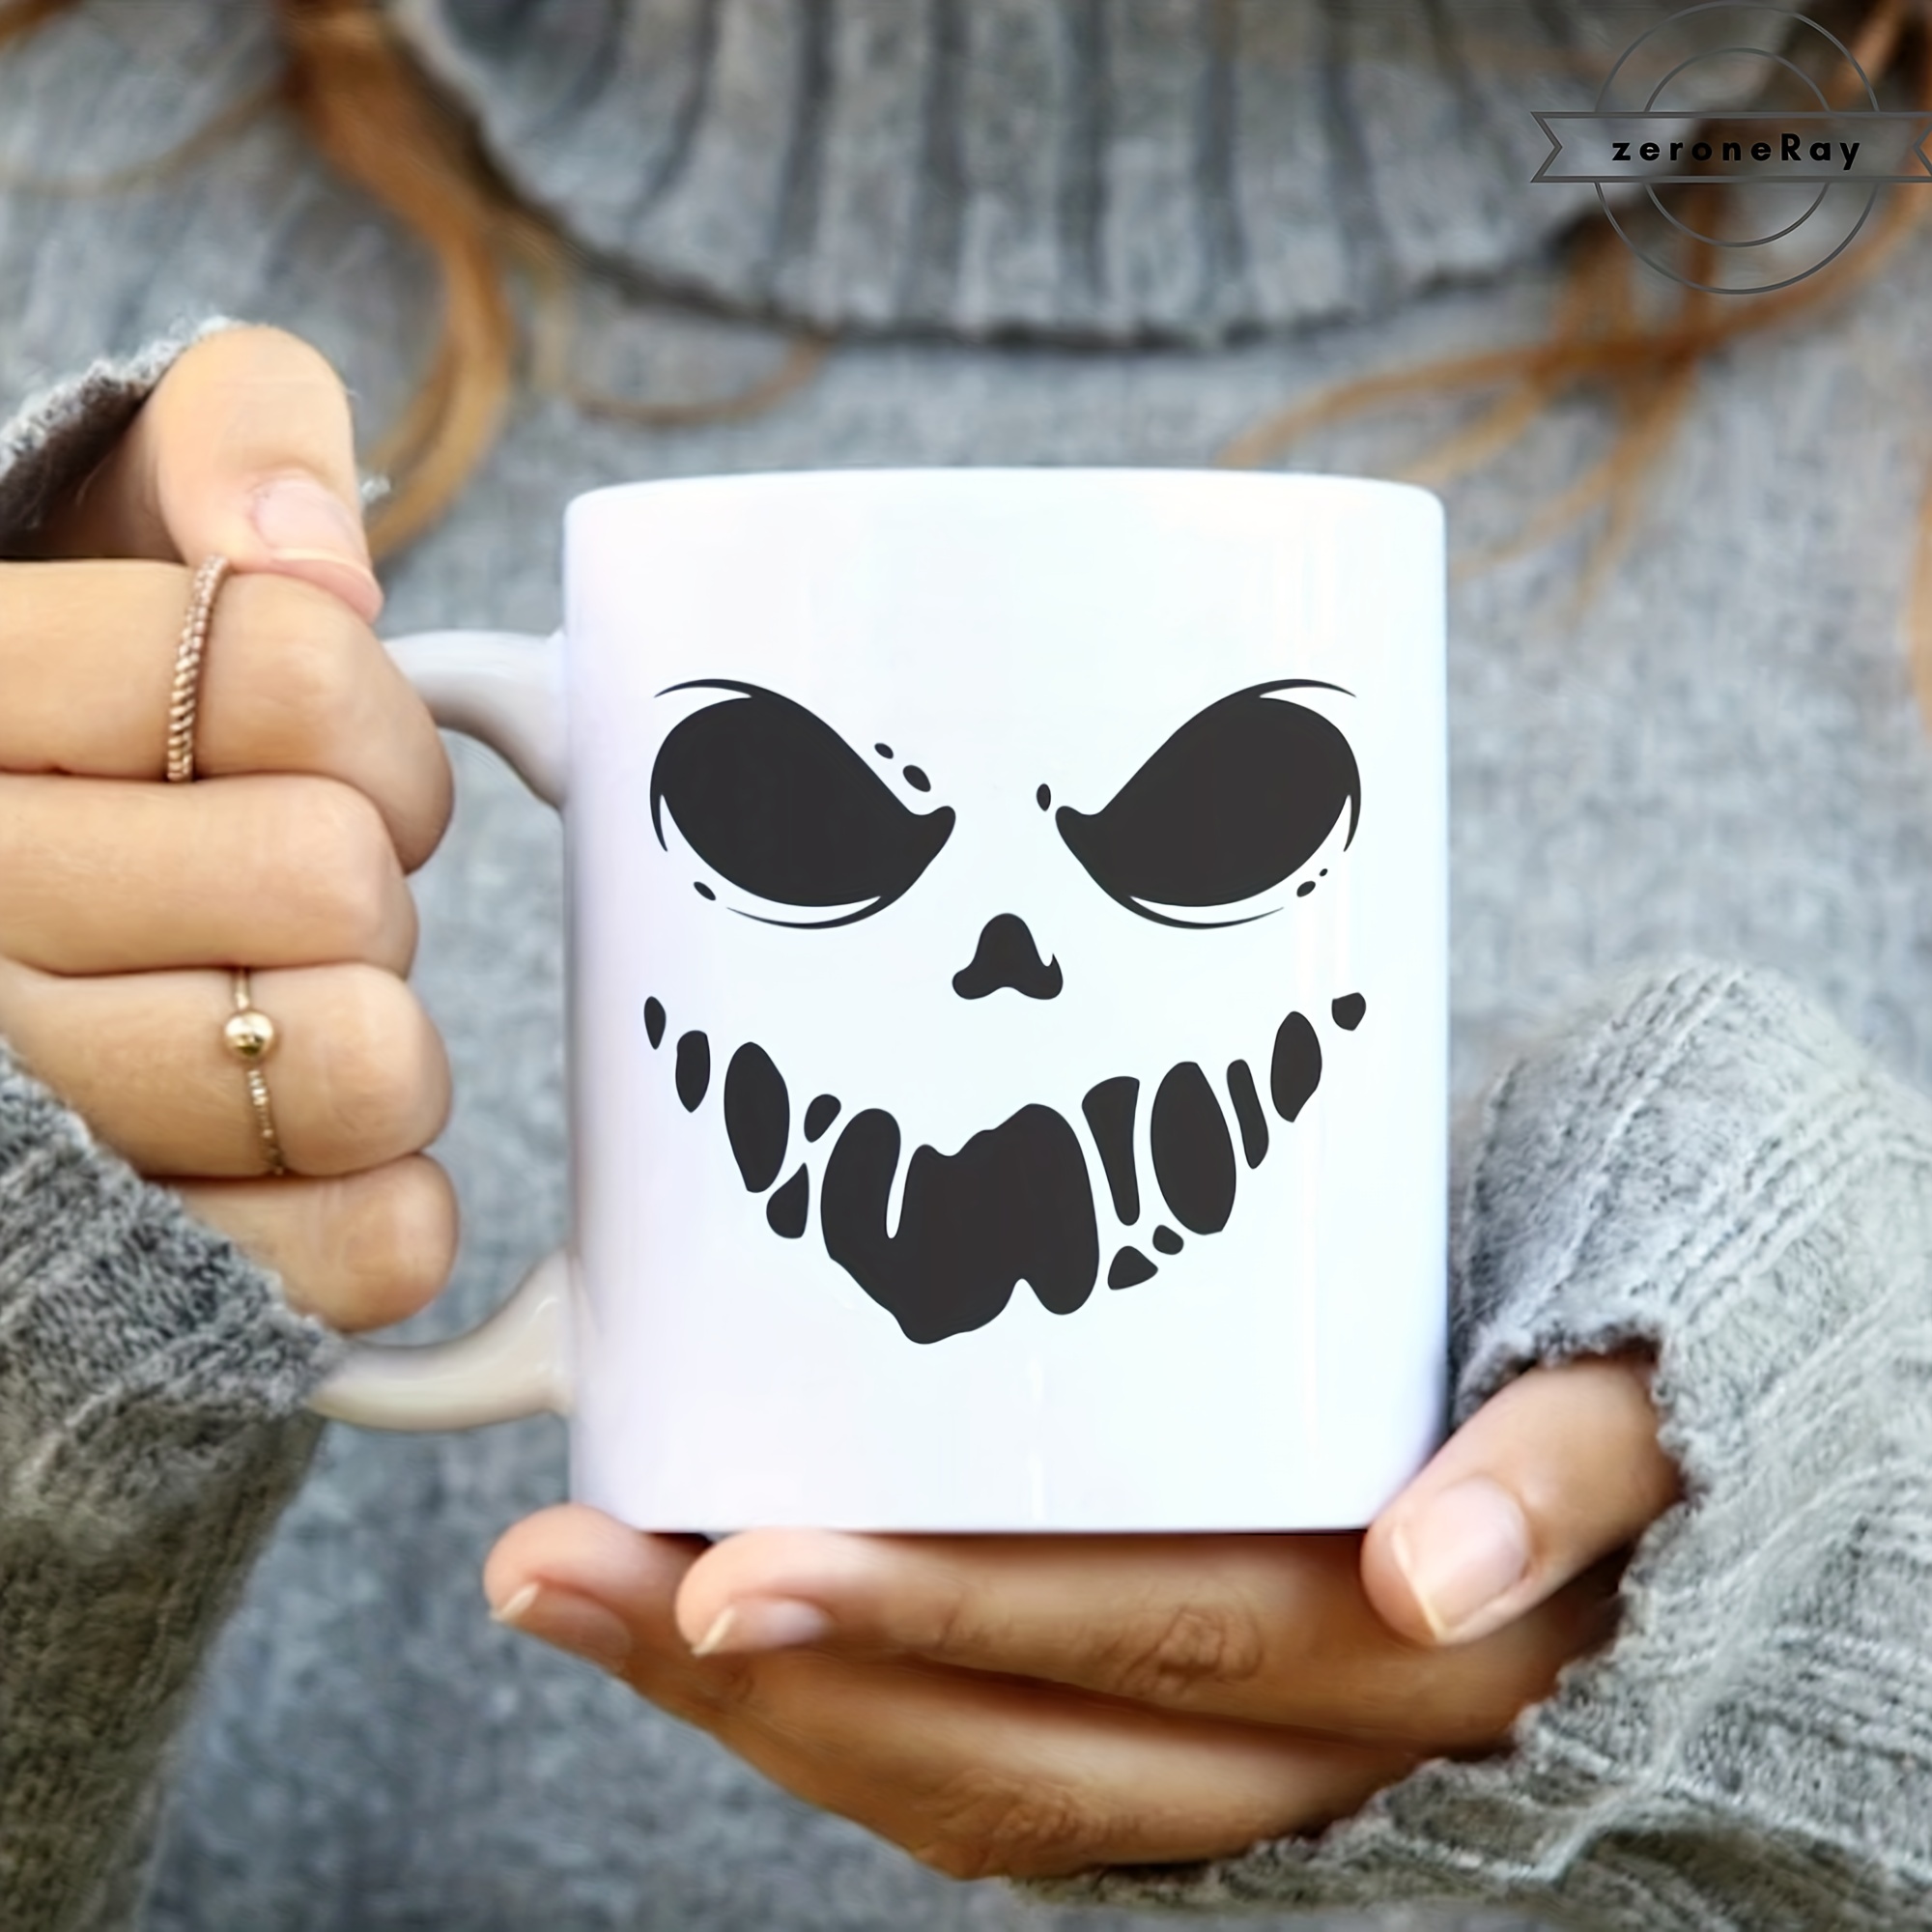 Coolife Halloween Pumpkin Ghost Skull Cups - 16 oz Pumpkins Fall Cup Mug,  Tumbler Glass Cups w/Lids …See more Coolife Halloween Pumpkin Ghost Skull